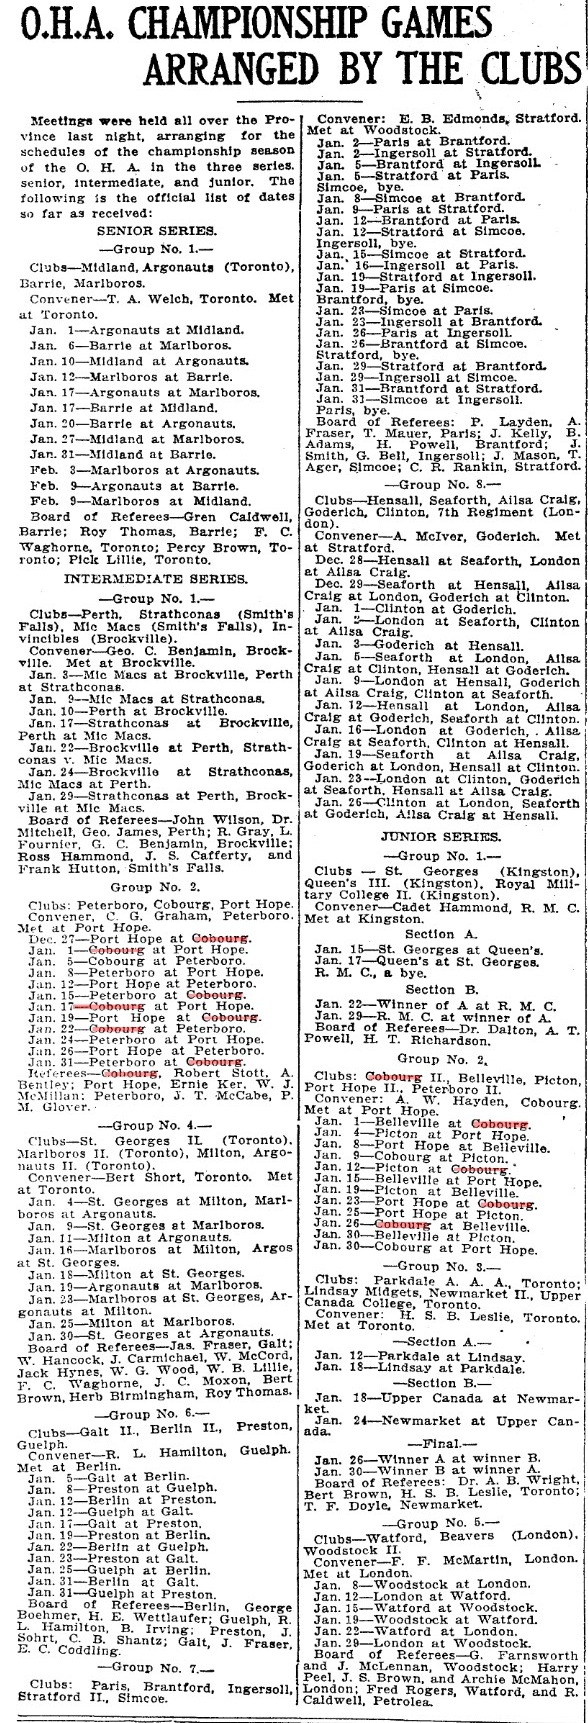 1905-12-07 Hockey -Intermediate and Junior Schedules arranged